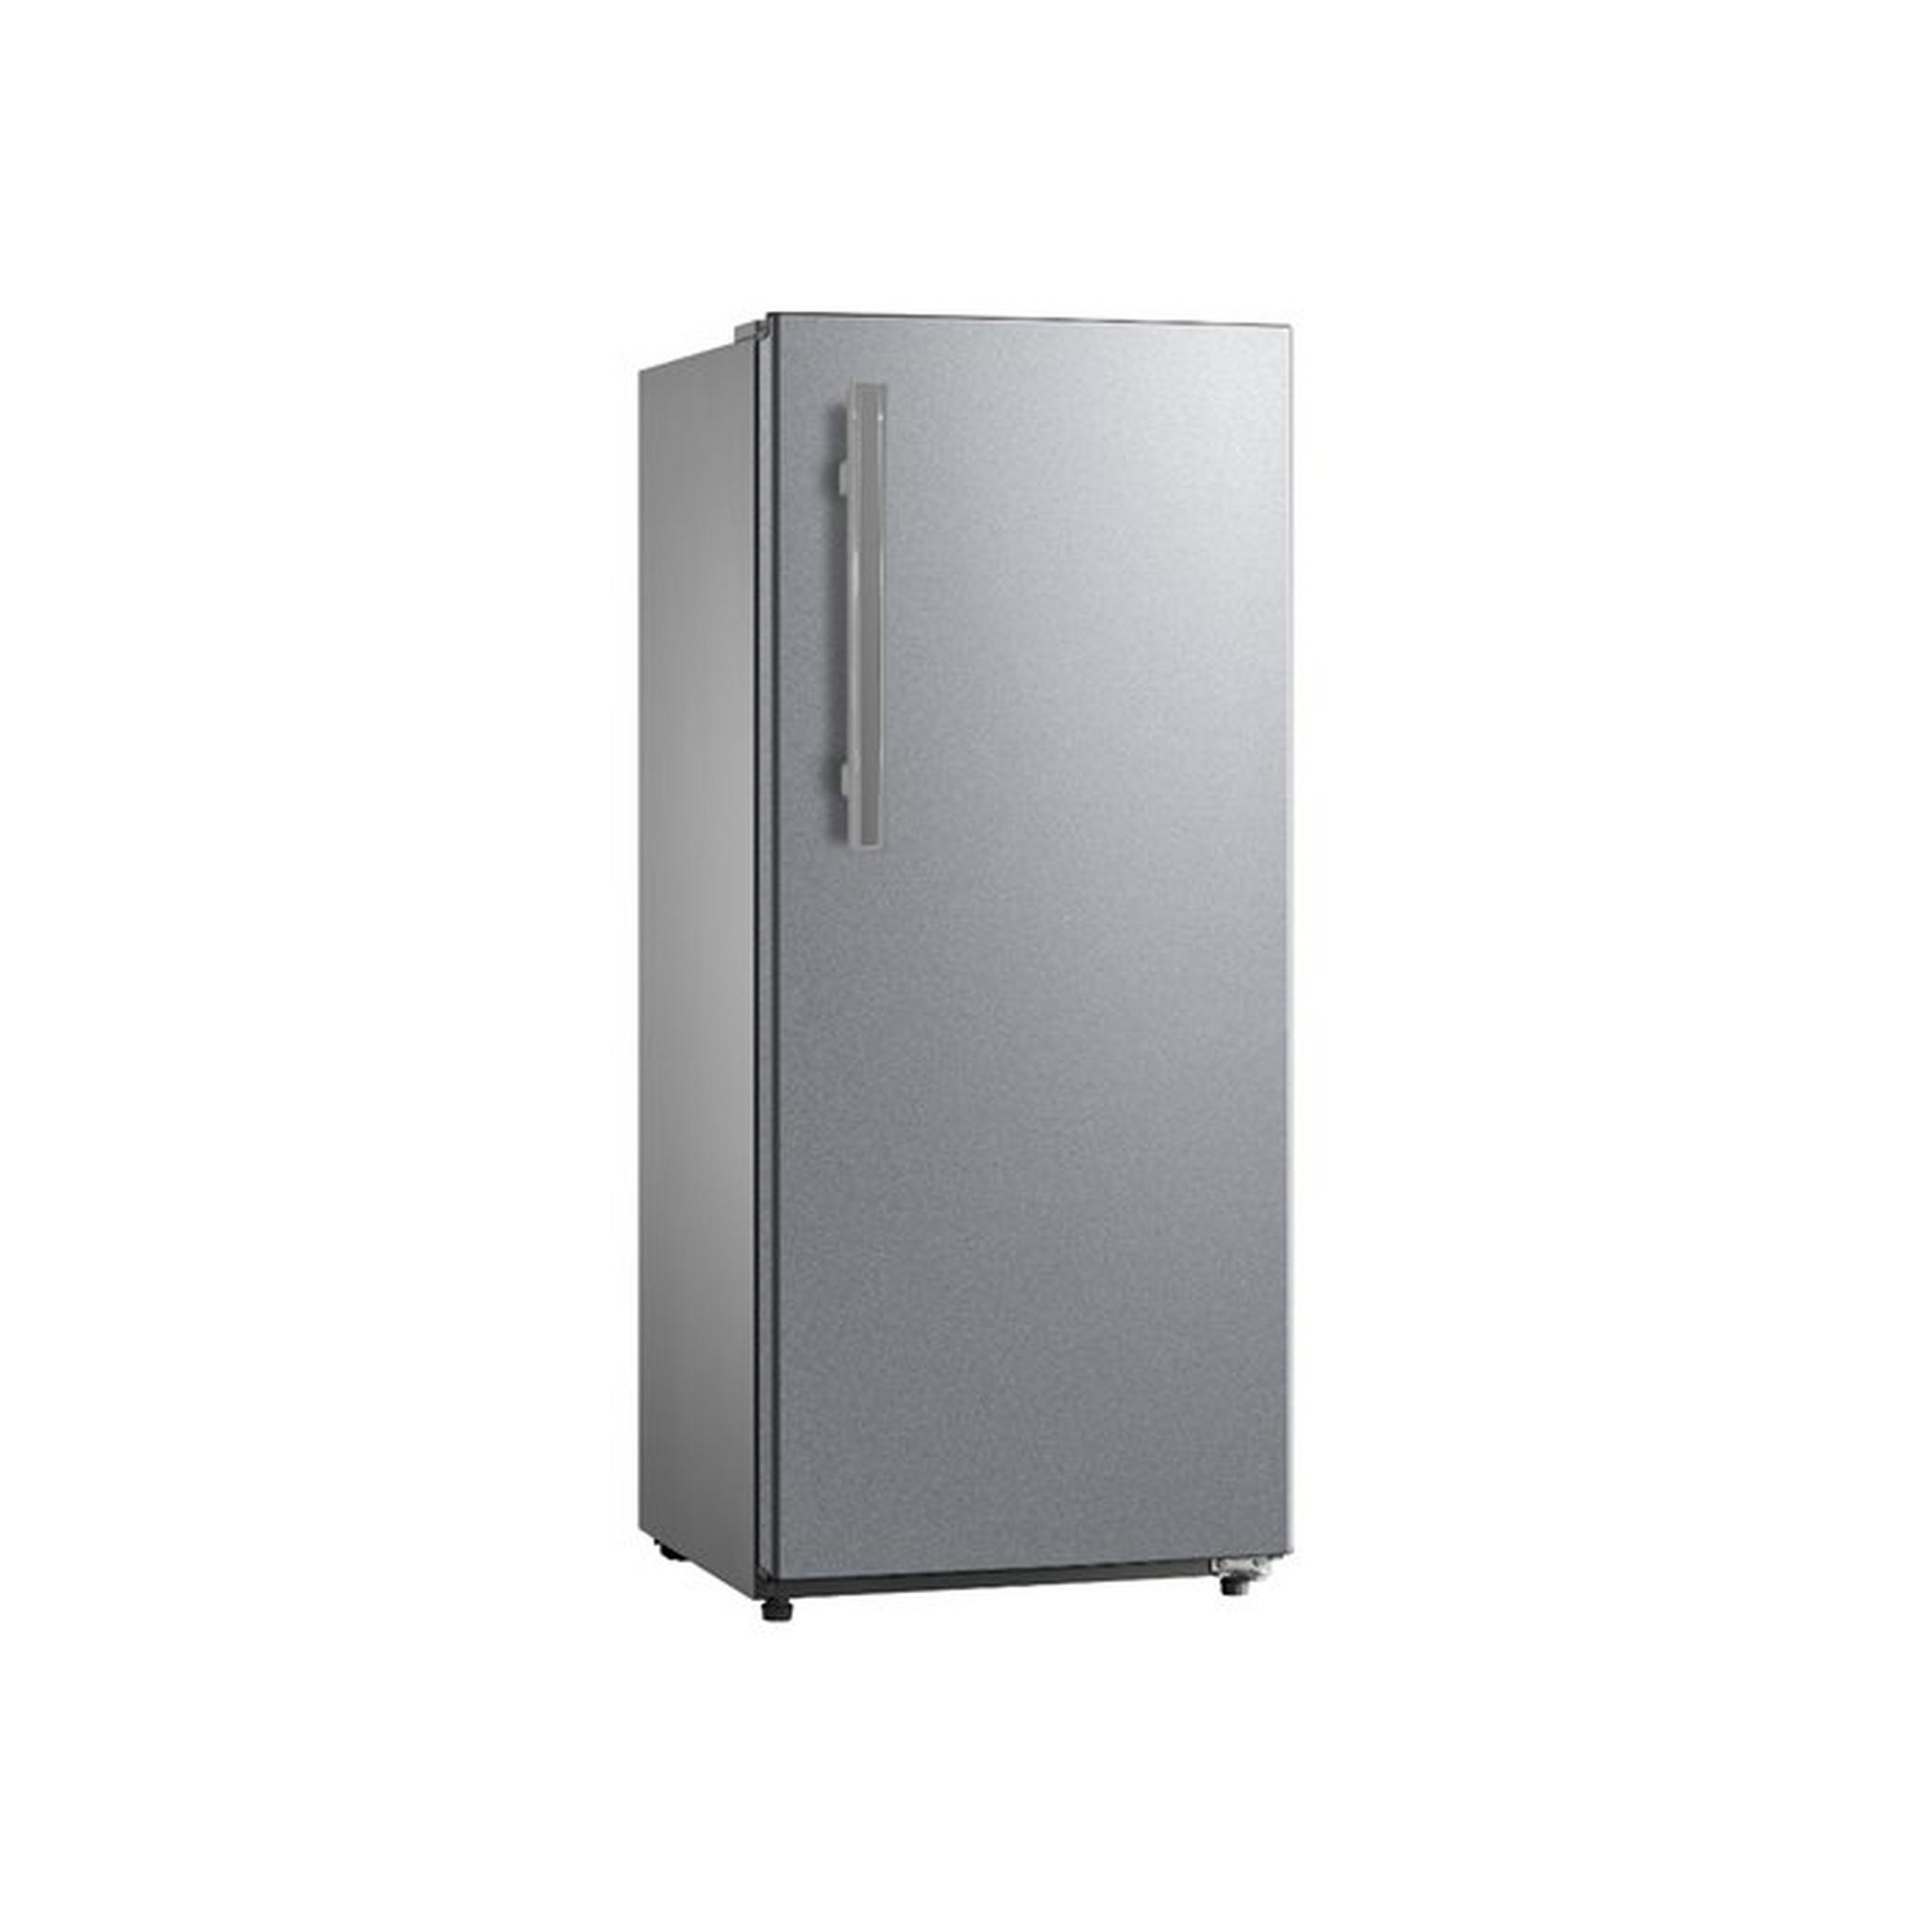 WANSA Top Mount Refrigerator, 8.7CFT, 247 Liters, WROG247DSC62 - Silver